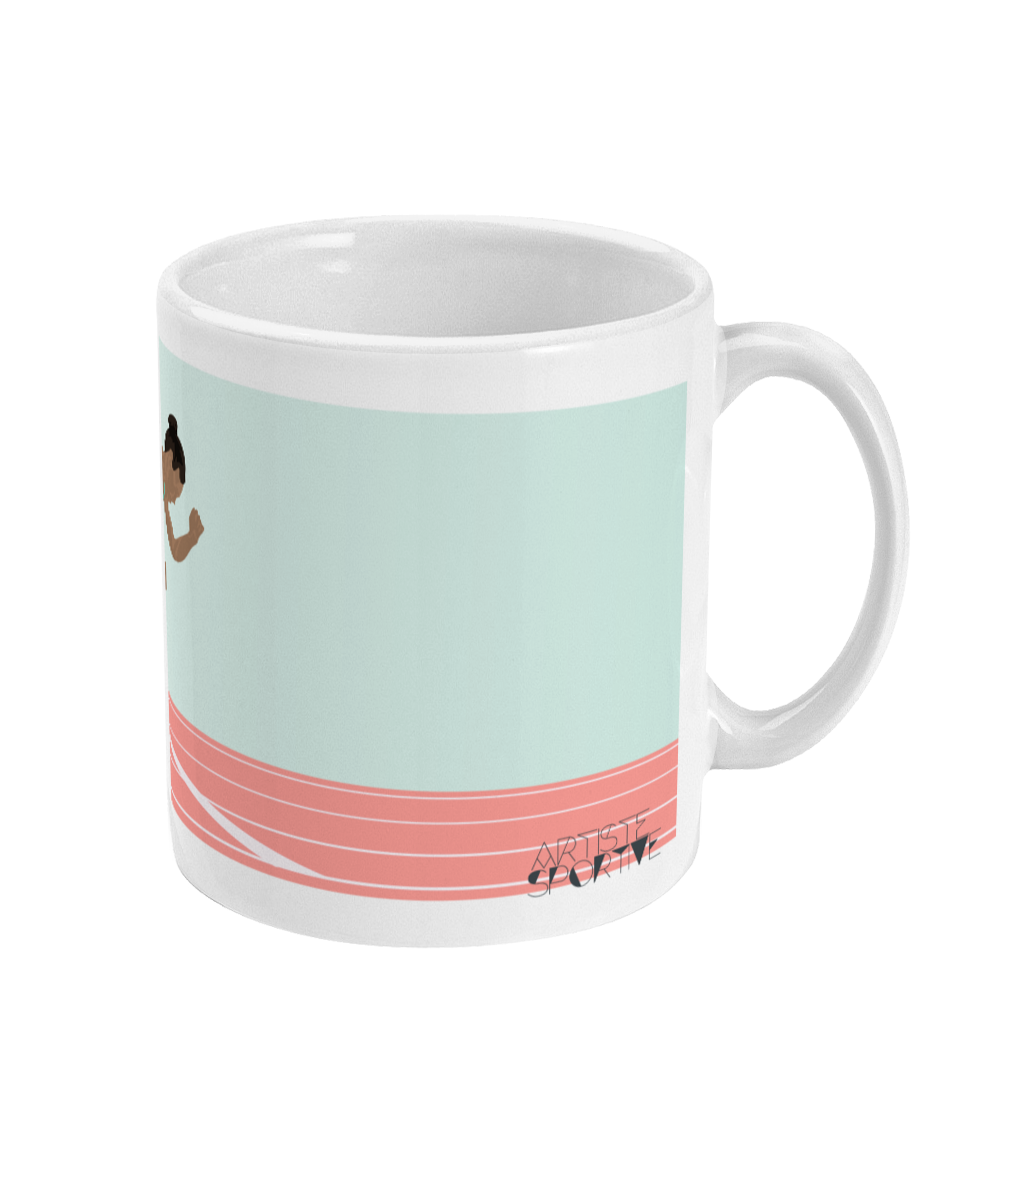 Athletics cup or mug "Women's Sprint" - Customizable